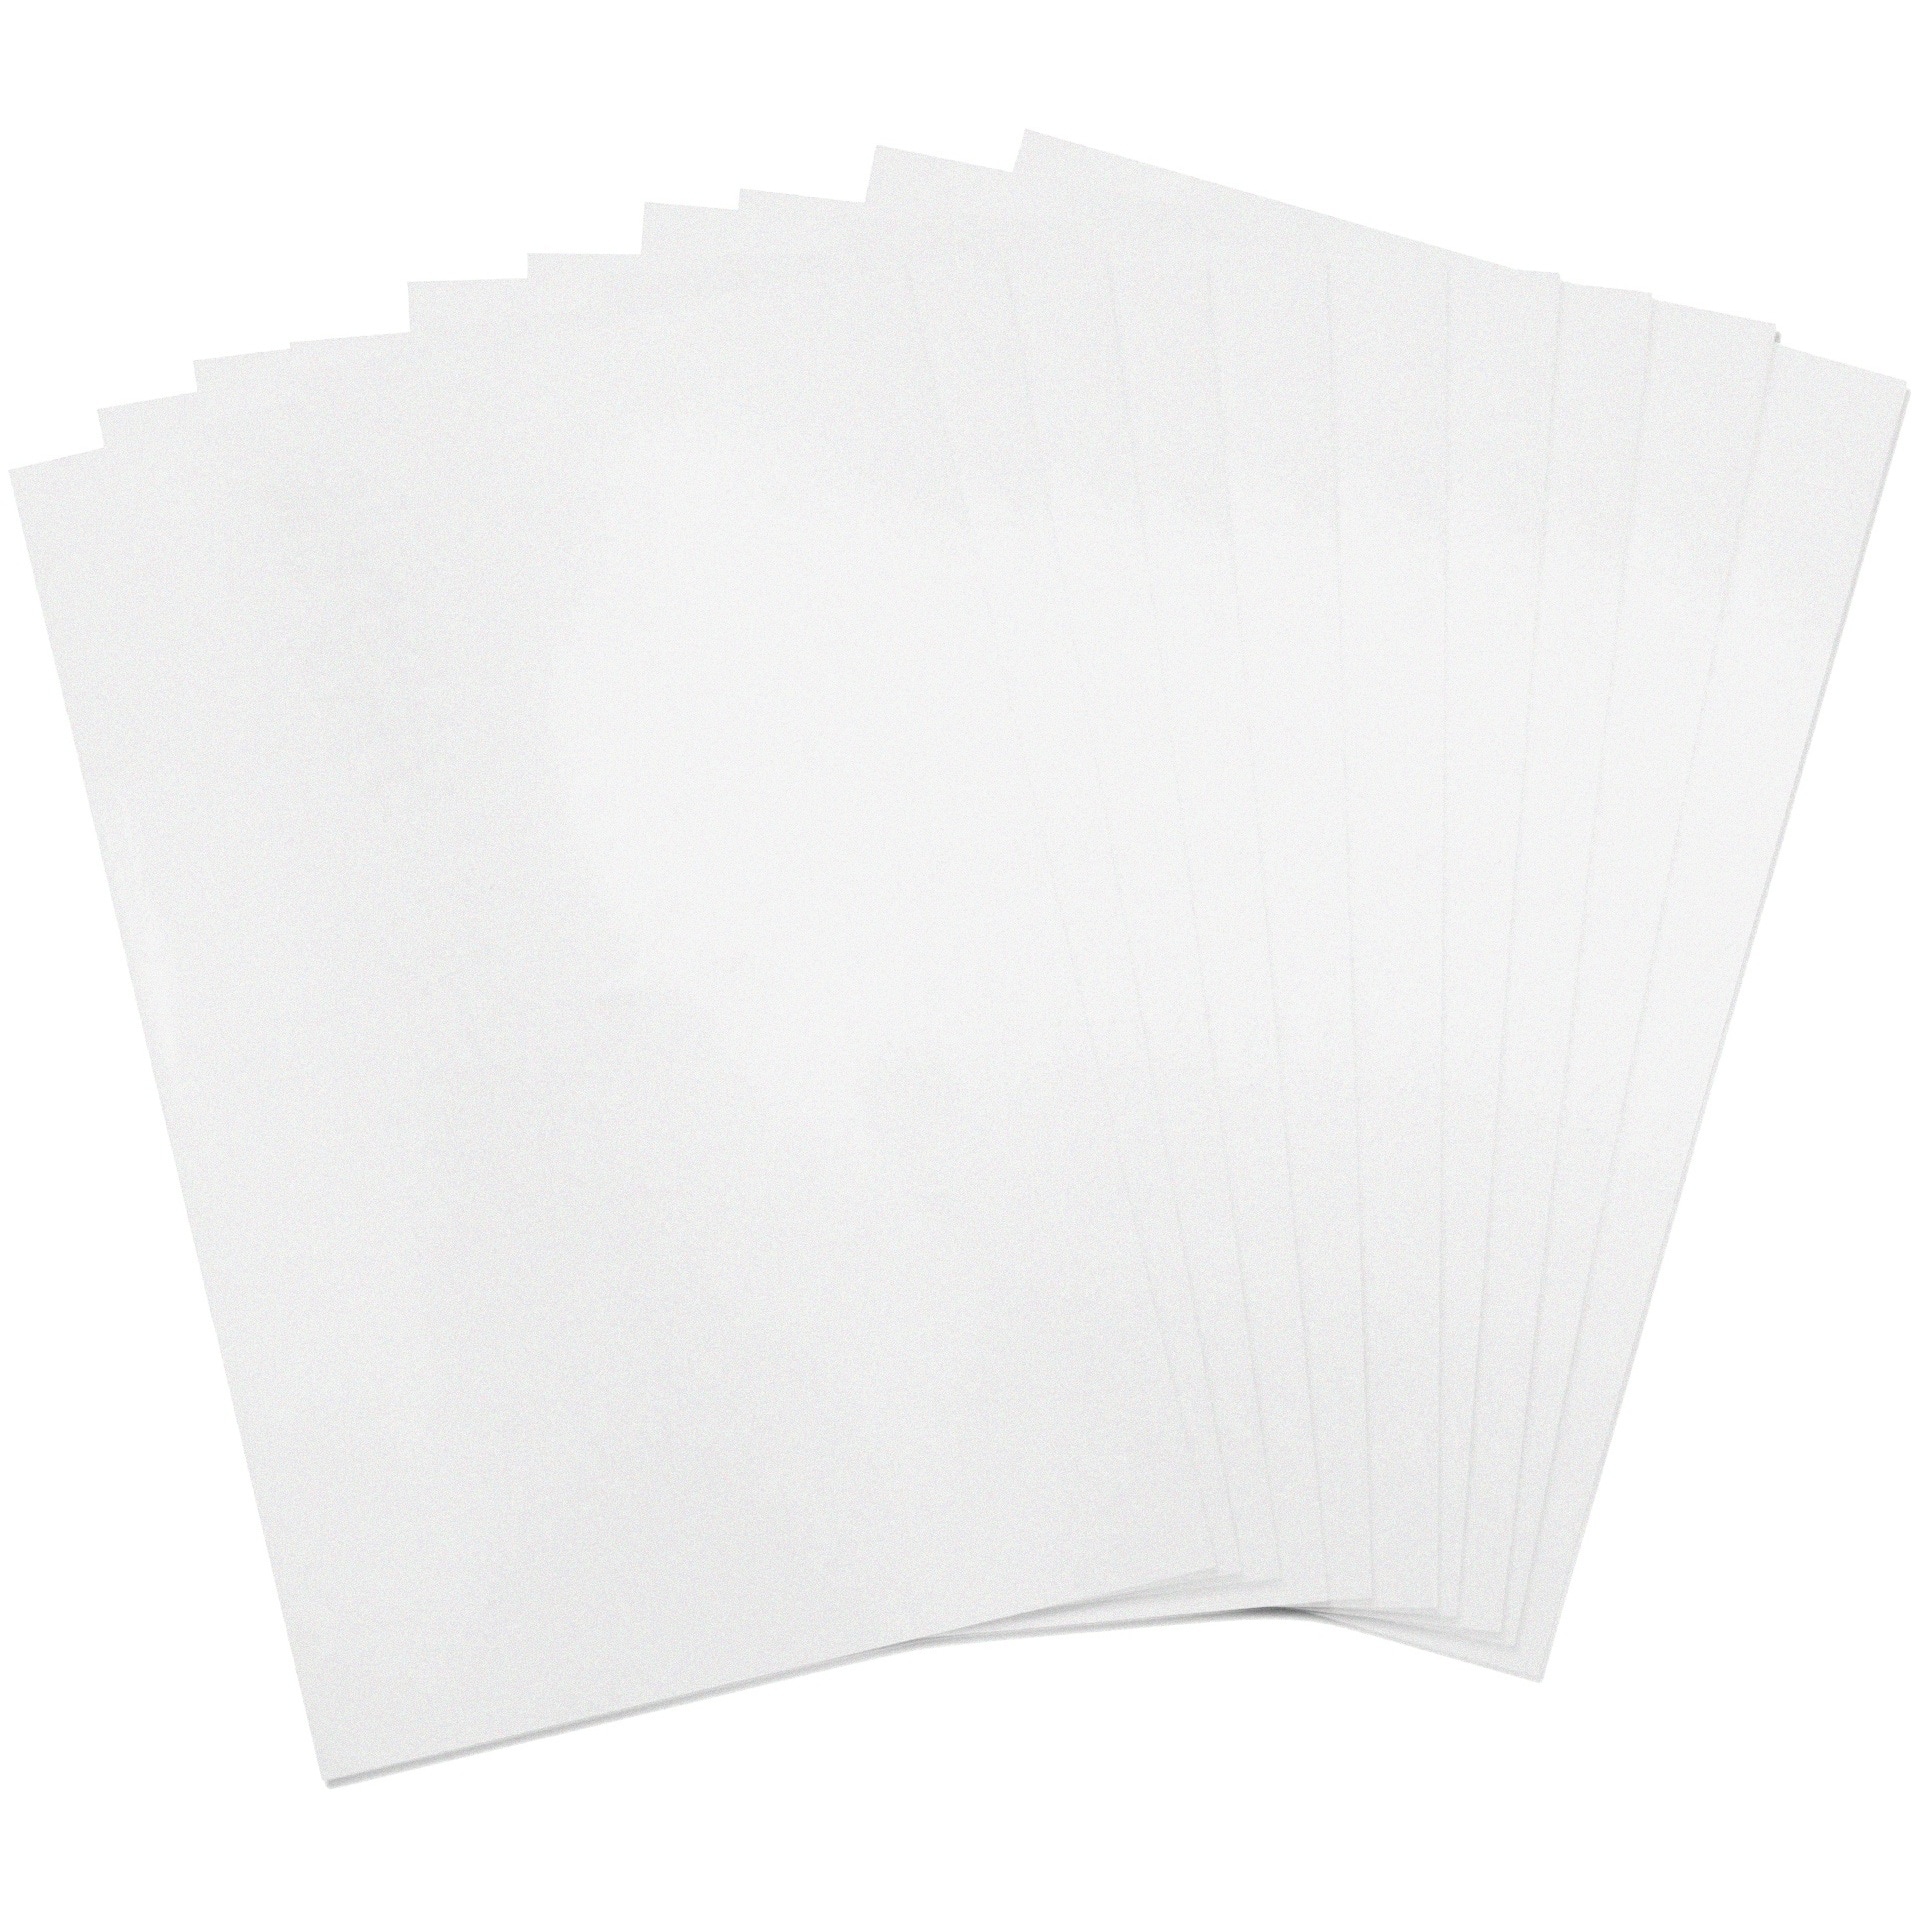 sizzix-surfacez-printable-shrink-plastic-sheets-10ct-michaels